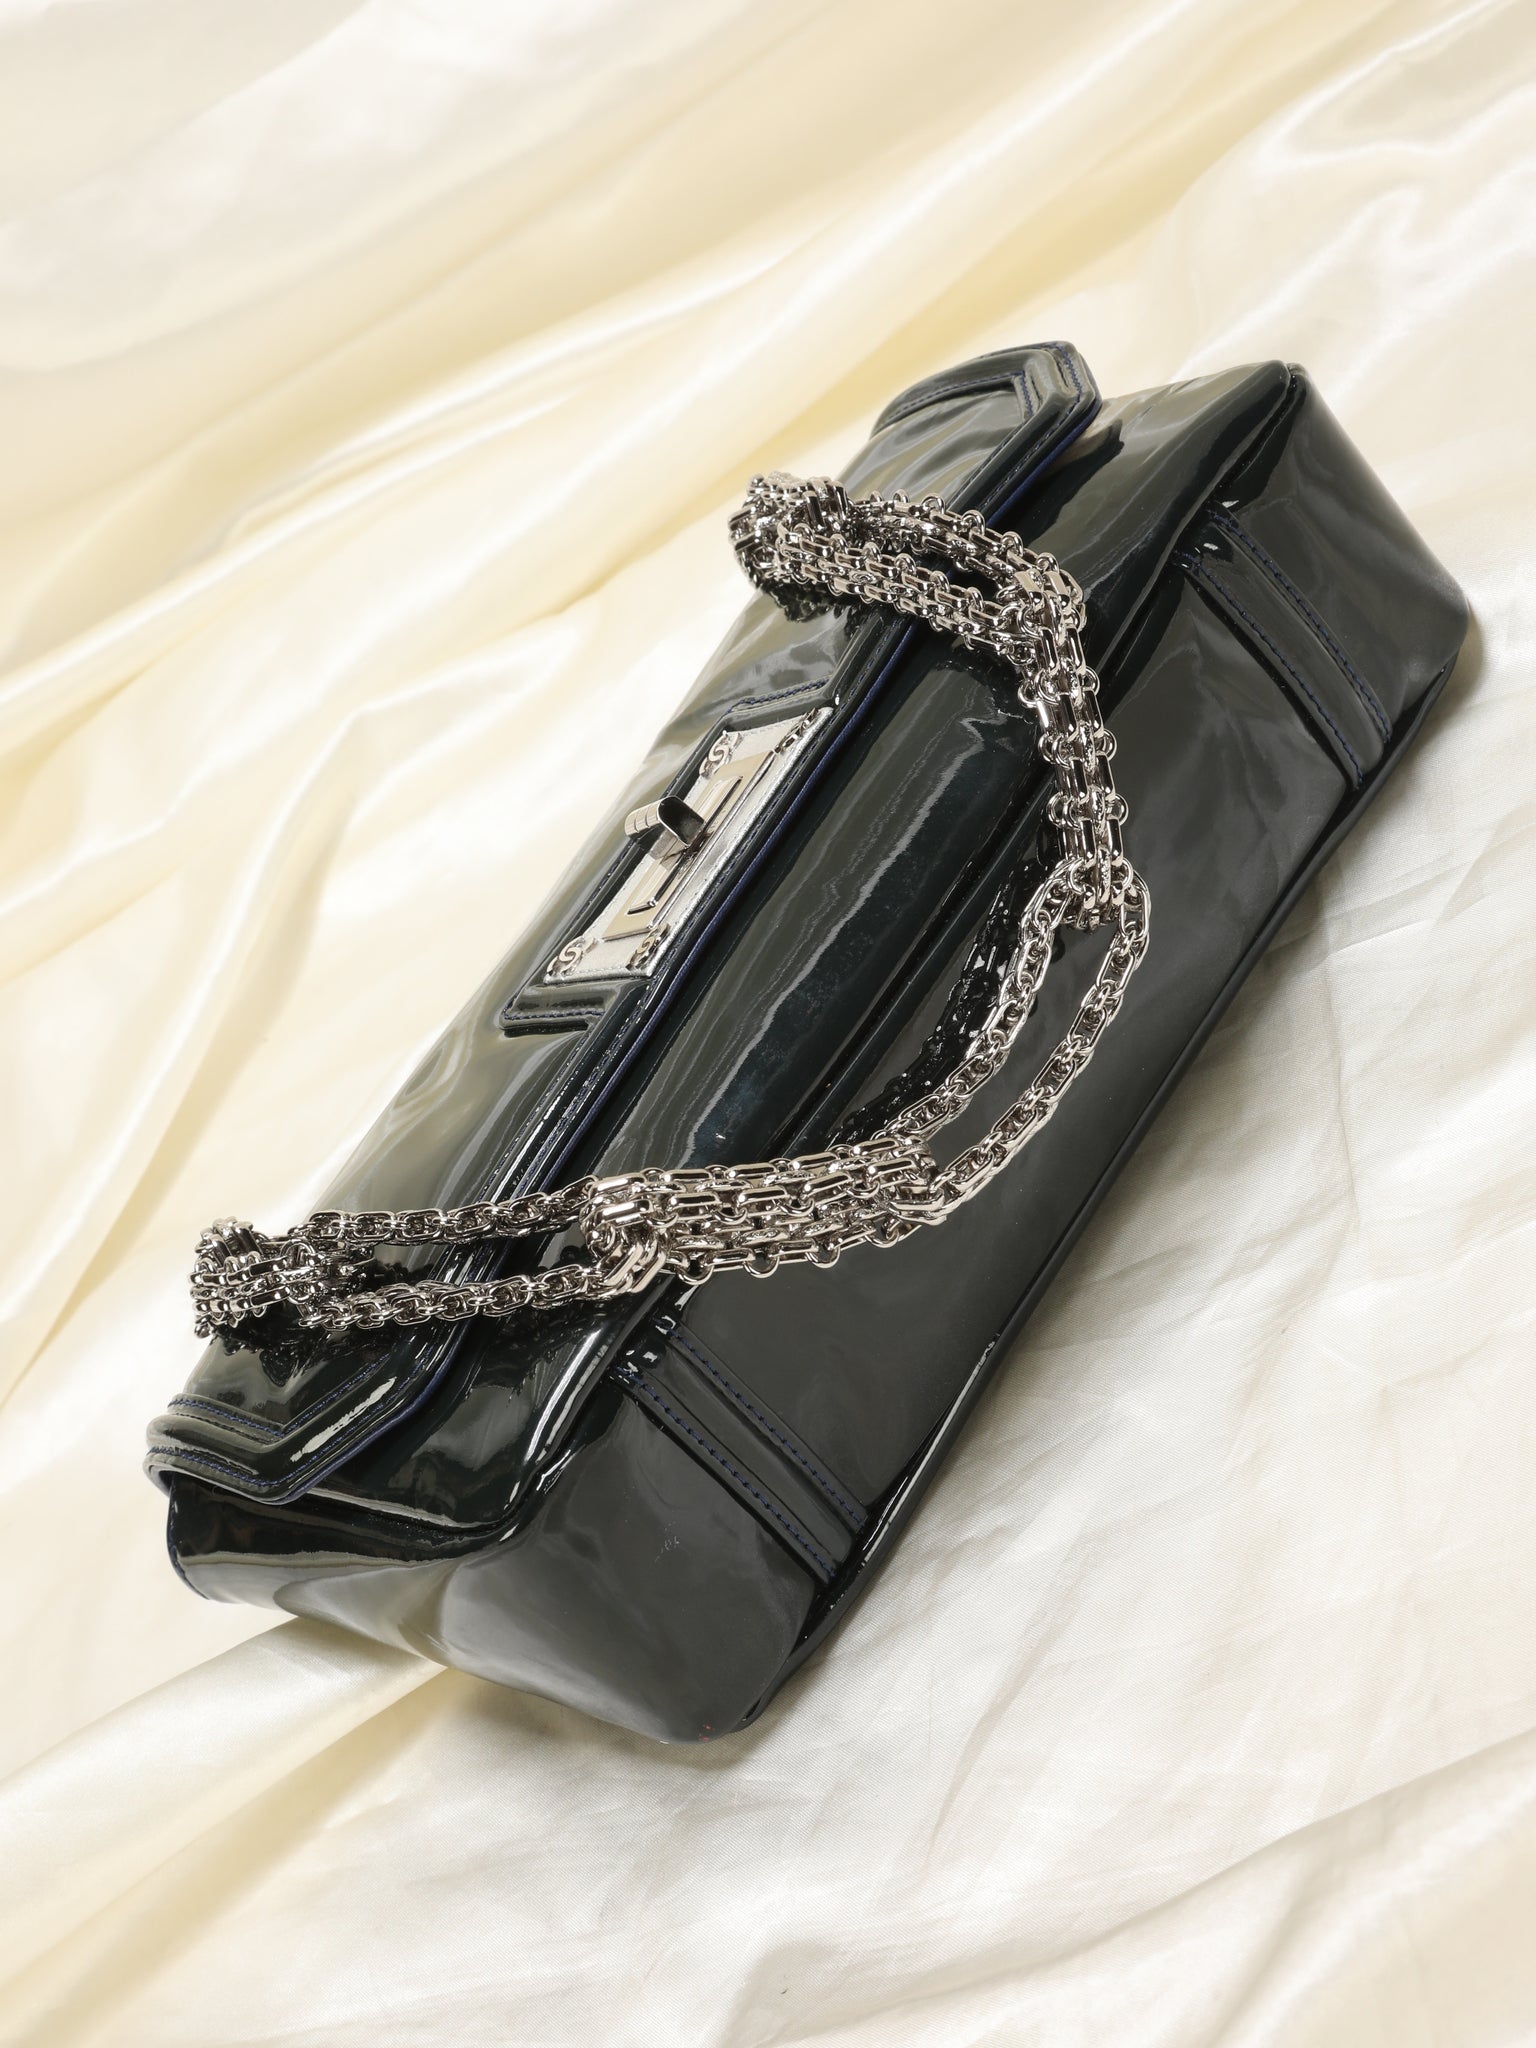 Chanel Patent Chain Bag